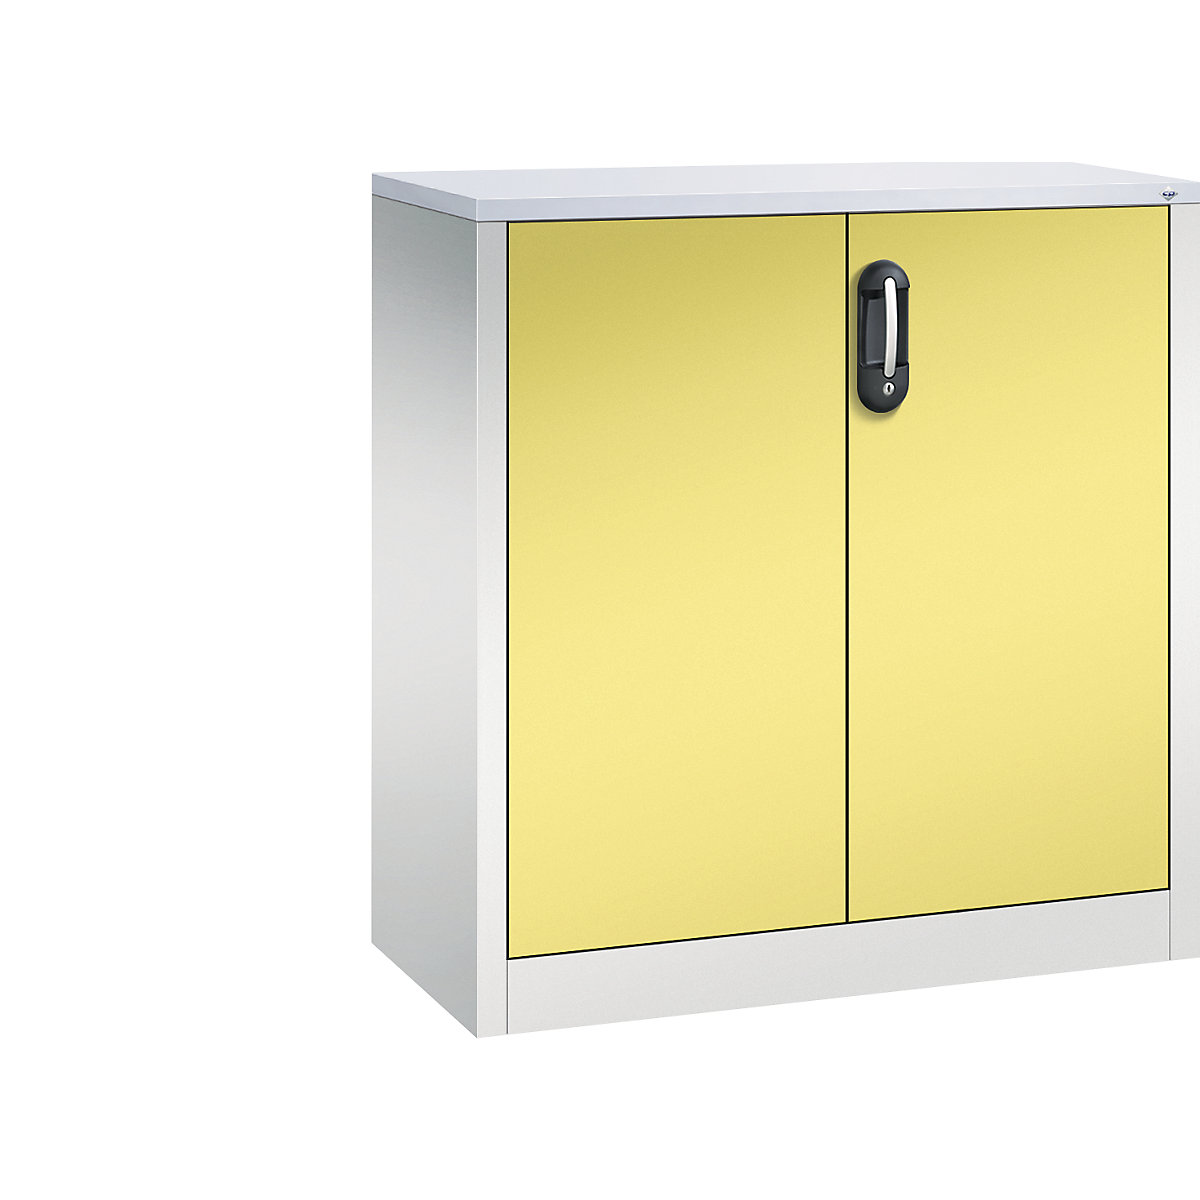 Niska komoda za dokumente ACURADO – C+P, 2 visine za registratore, VxŠxD 1000 x 930 x 400 mm, u svijetlosivoj / sumpor žutoj boji